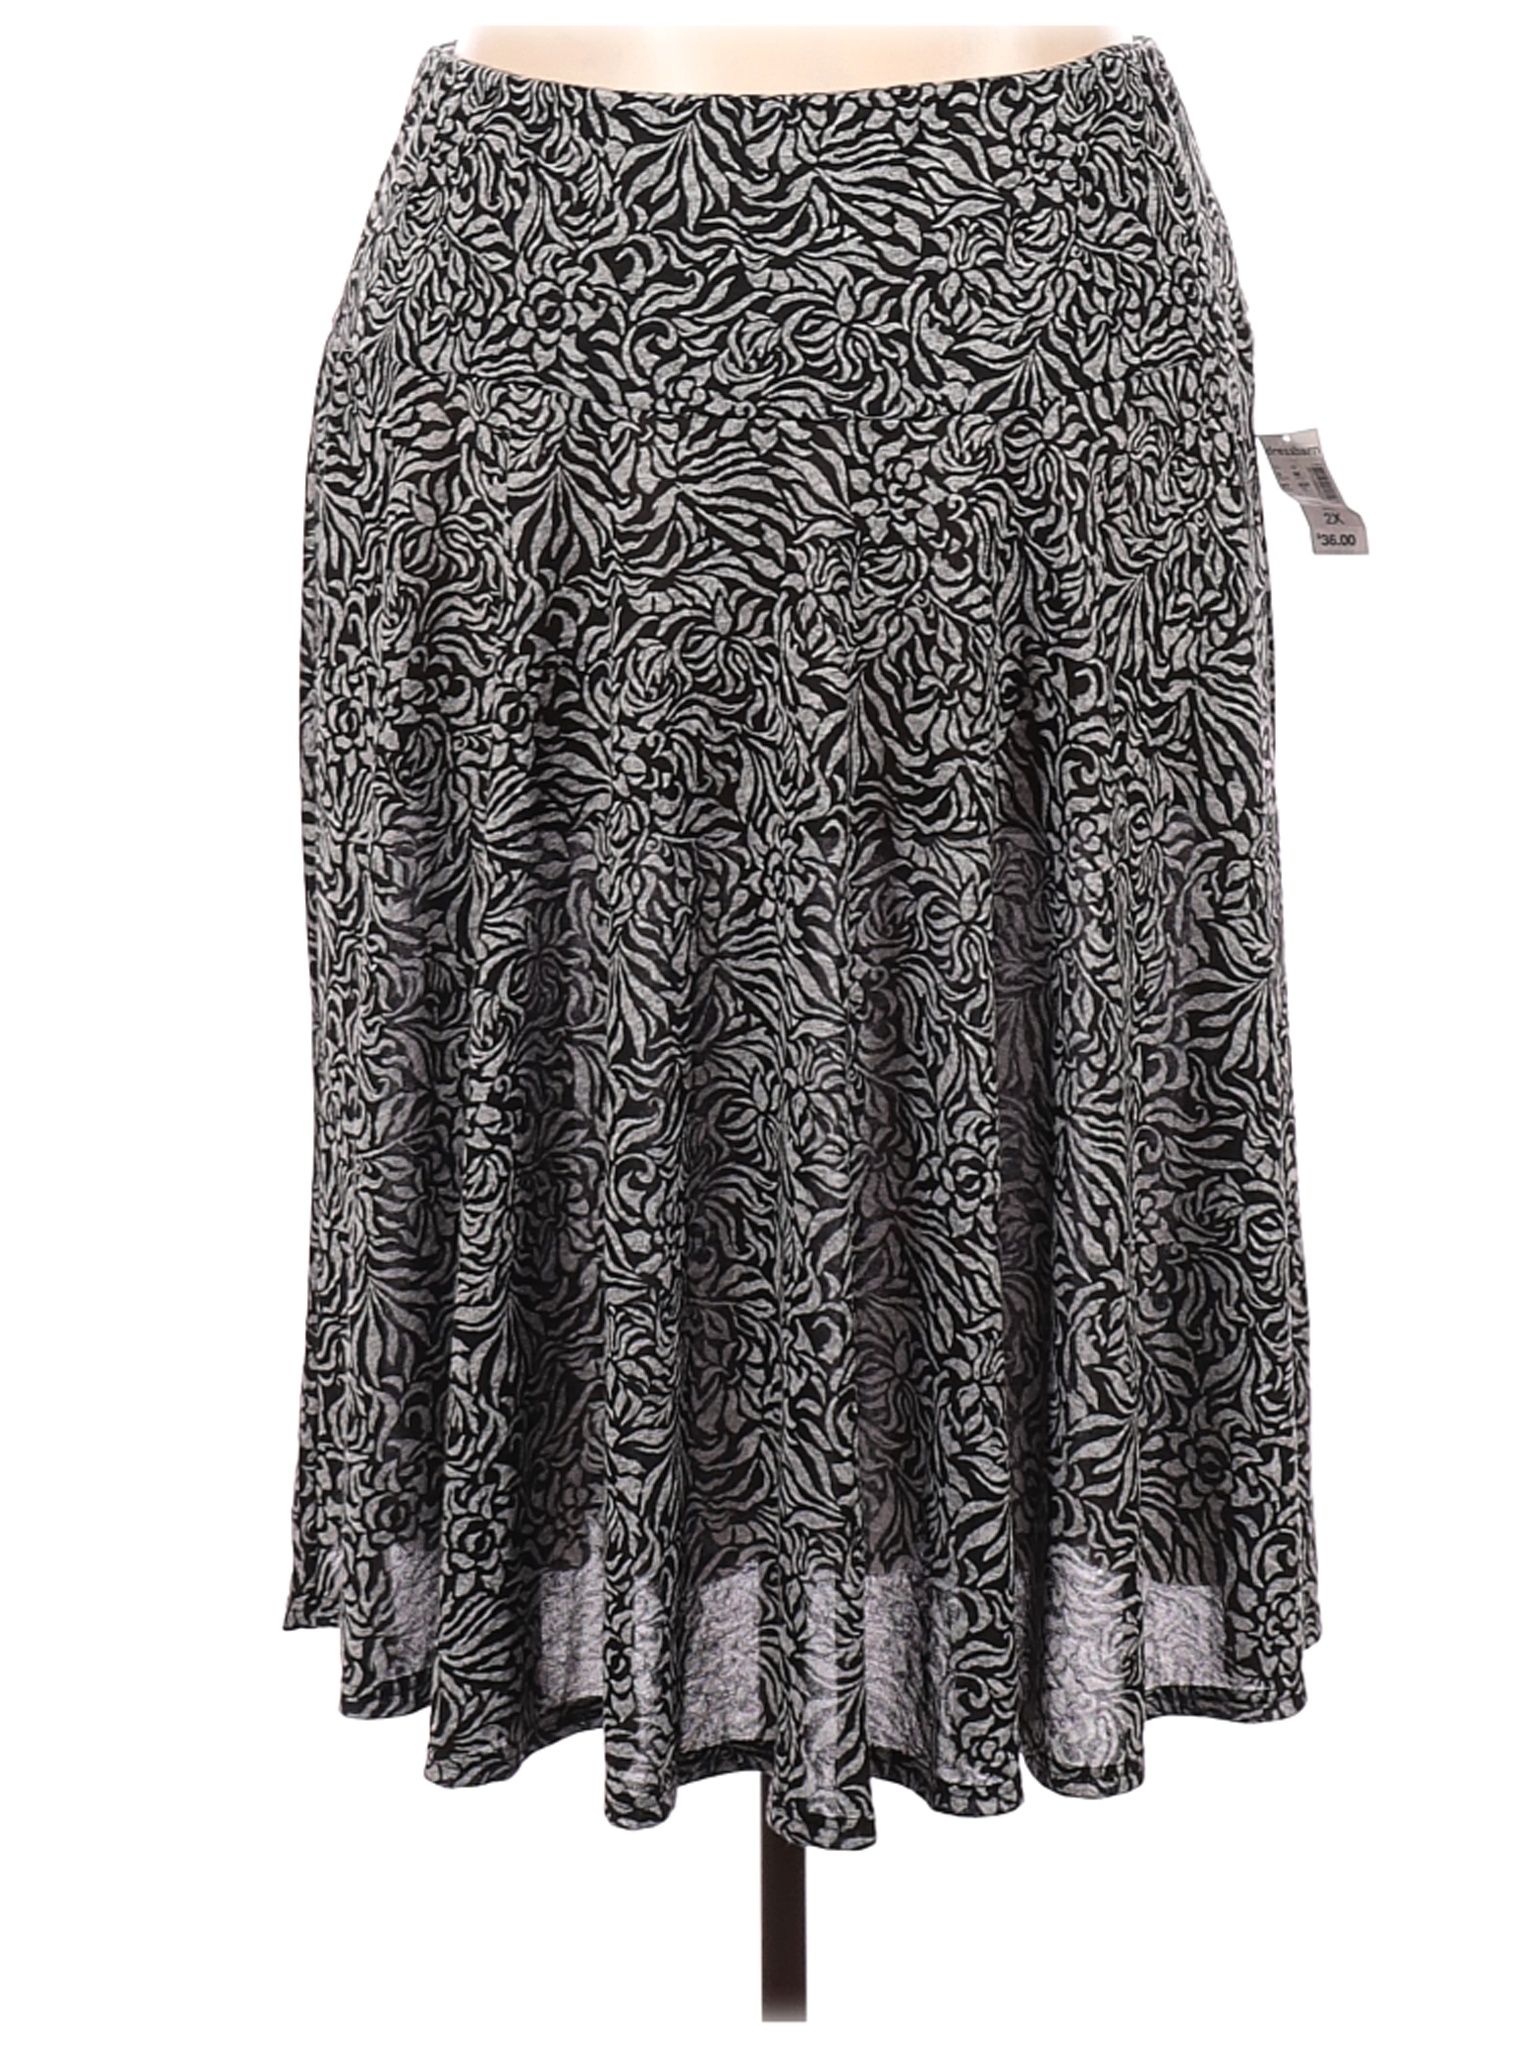 NWT DressBarn Women Black Casual Skirt 2X Plus | eBay